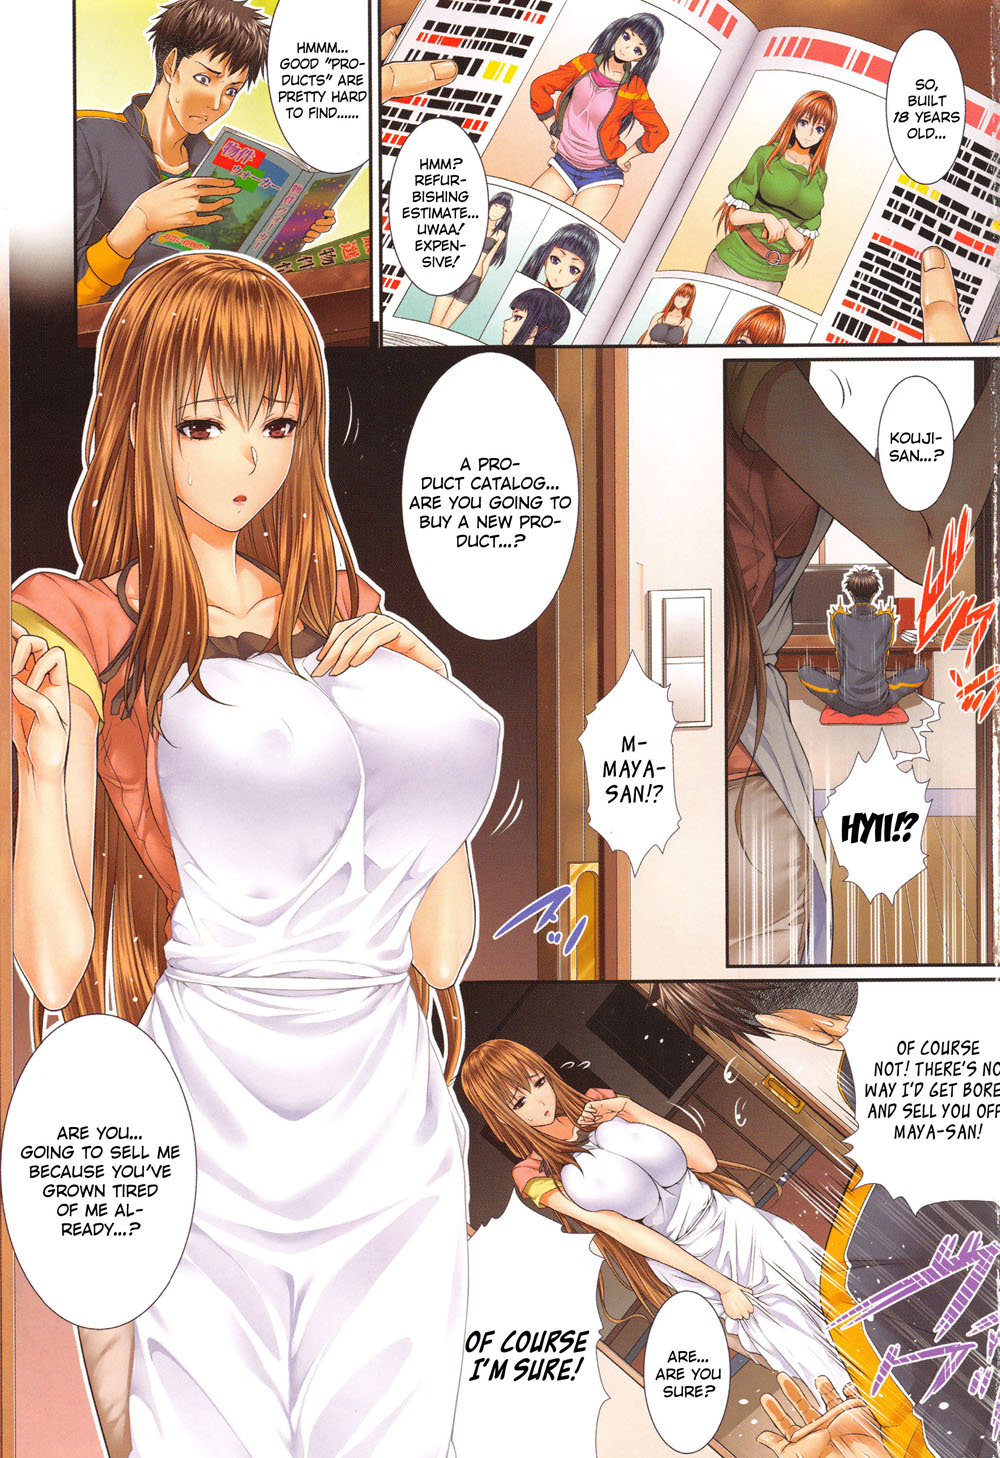 Housewife with amazing big tits impregnated by her young master in Zucchini Shinchiku Bukken Hen Hentai Comic